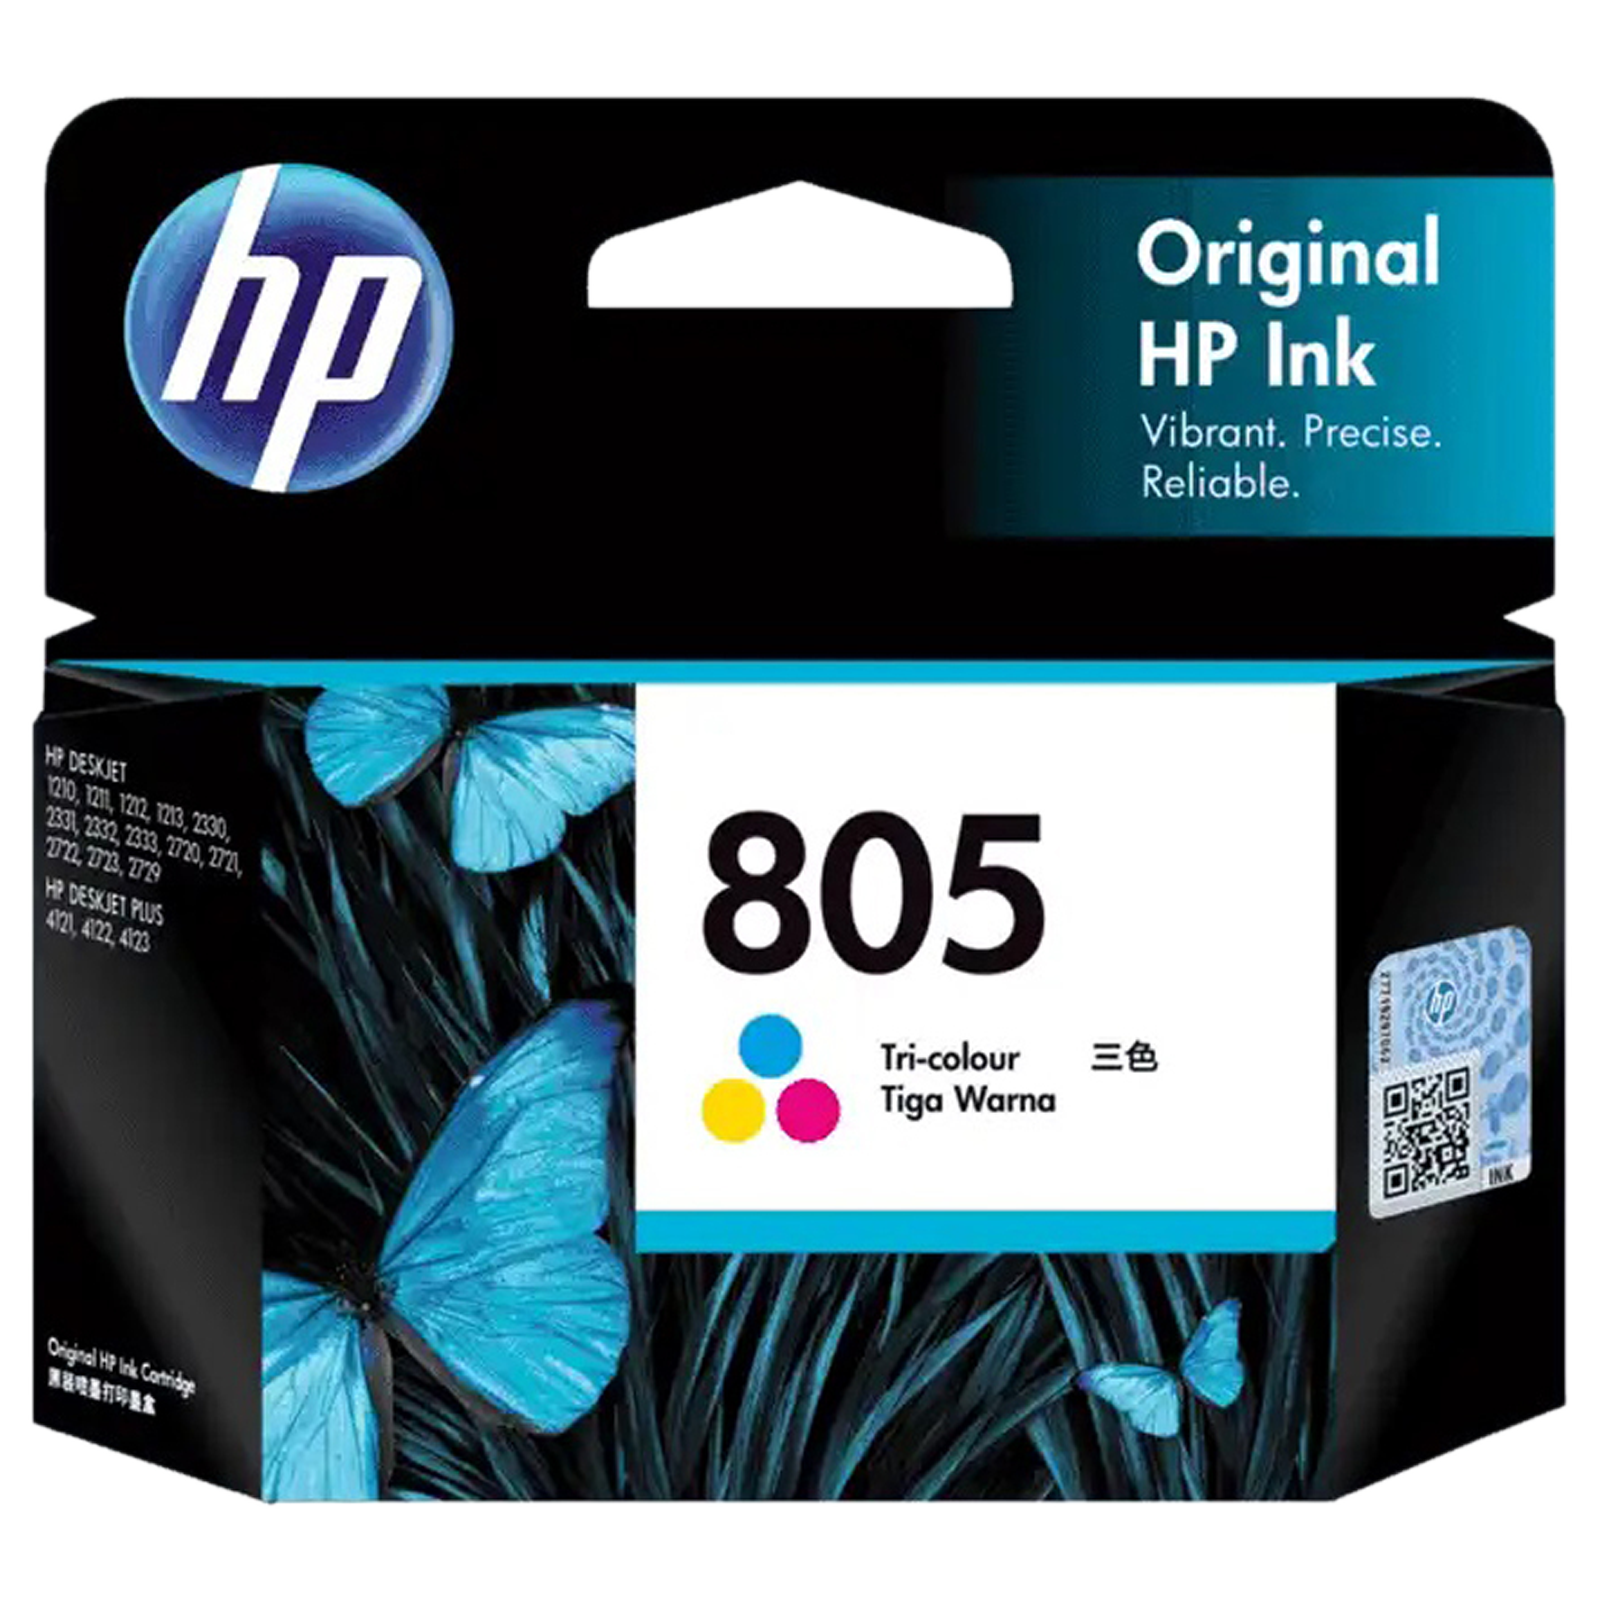 HP 805XL High Yield Tri-color Original Ink Cartridge (3YM72AA, Blue, Yellow & Pink)_1